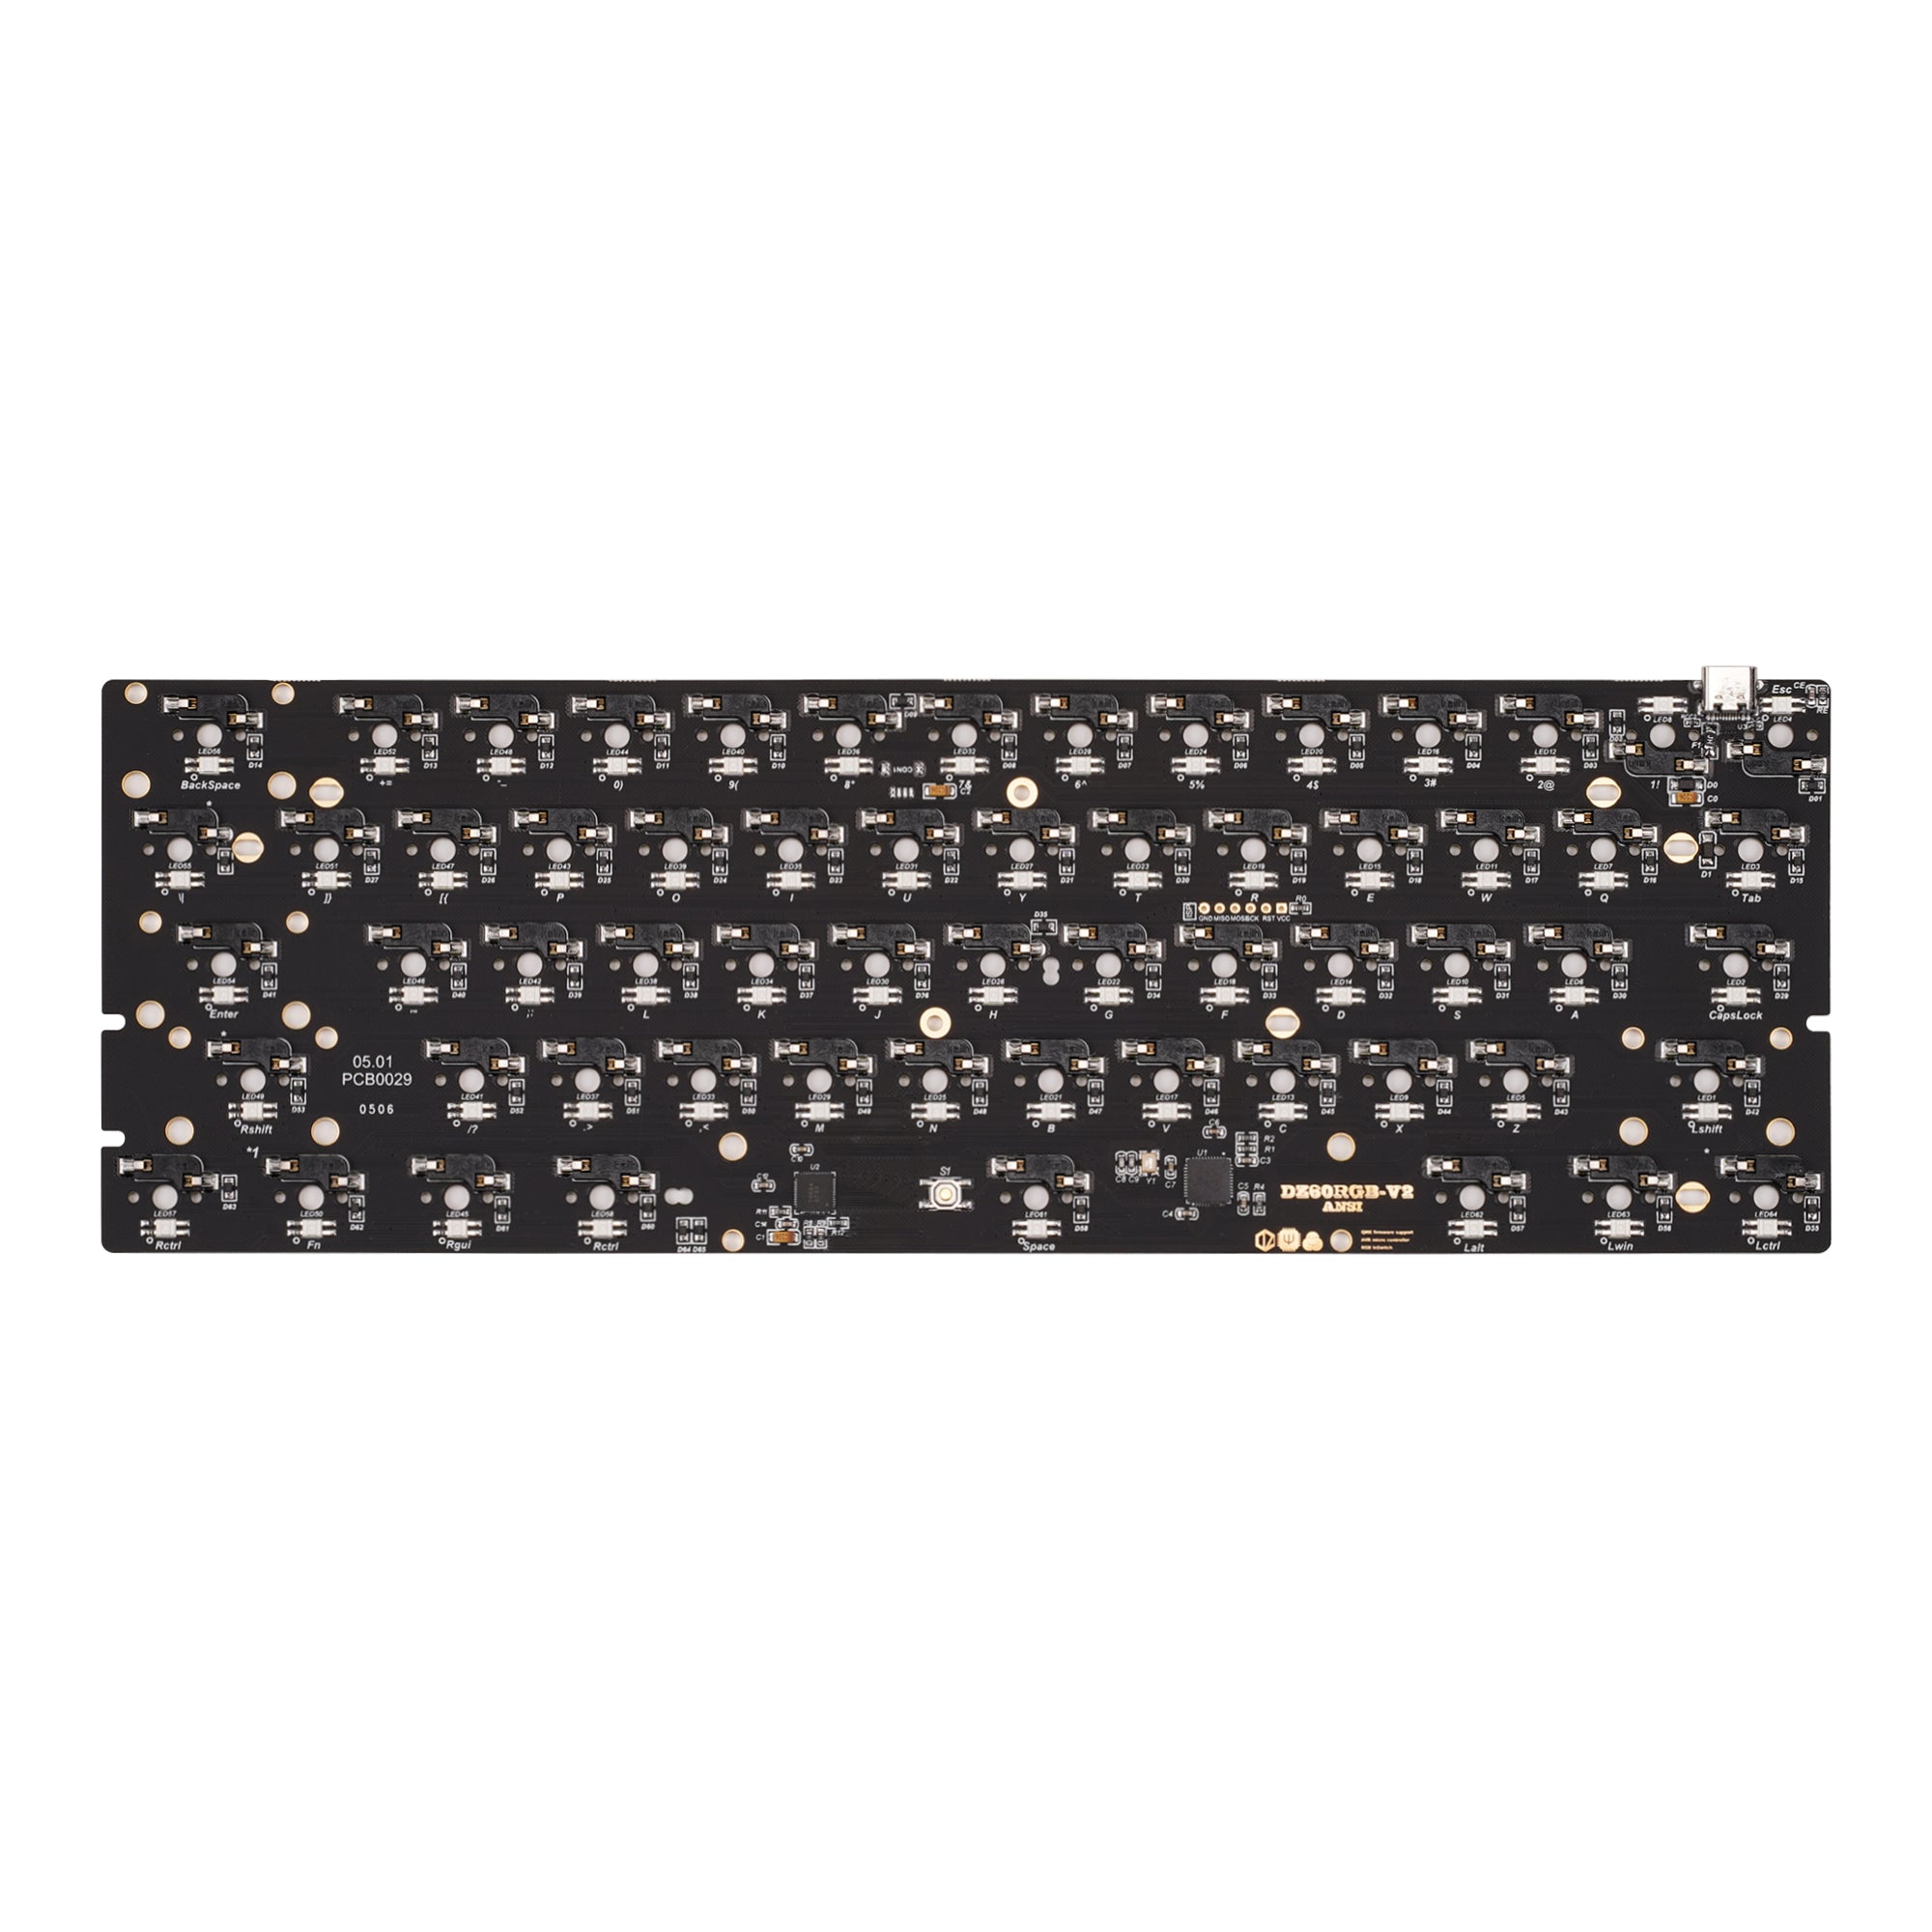 KBDfans Custom Keyboard DZ60RGB-ANSI v2 Hot Swap Mechanical keyboard PCB